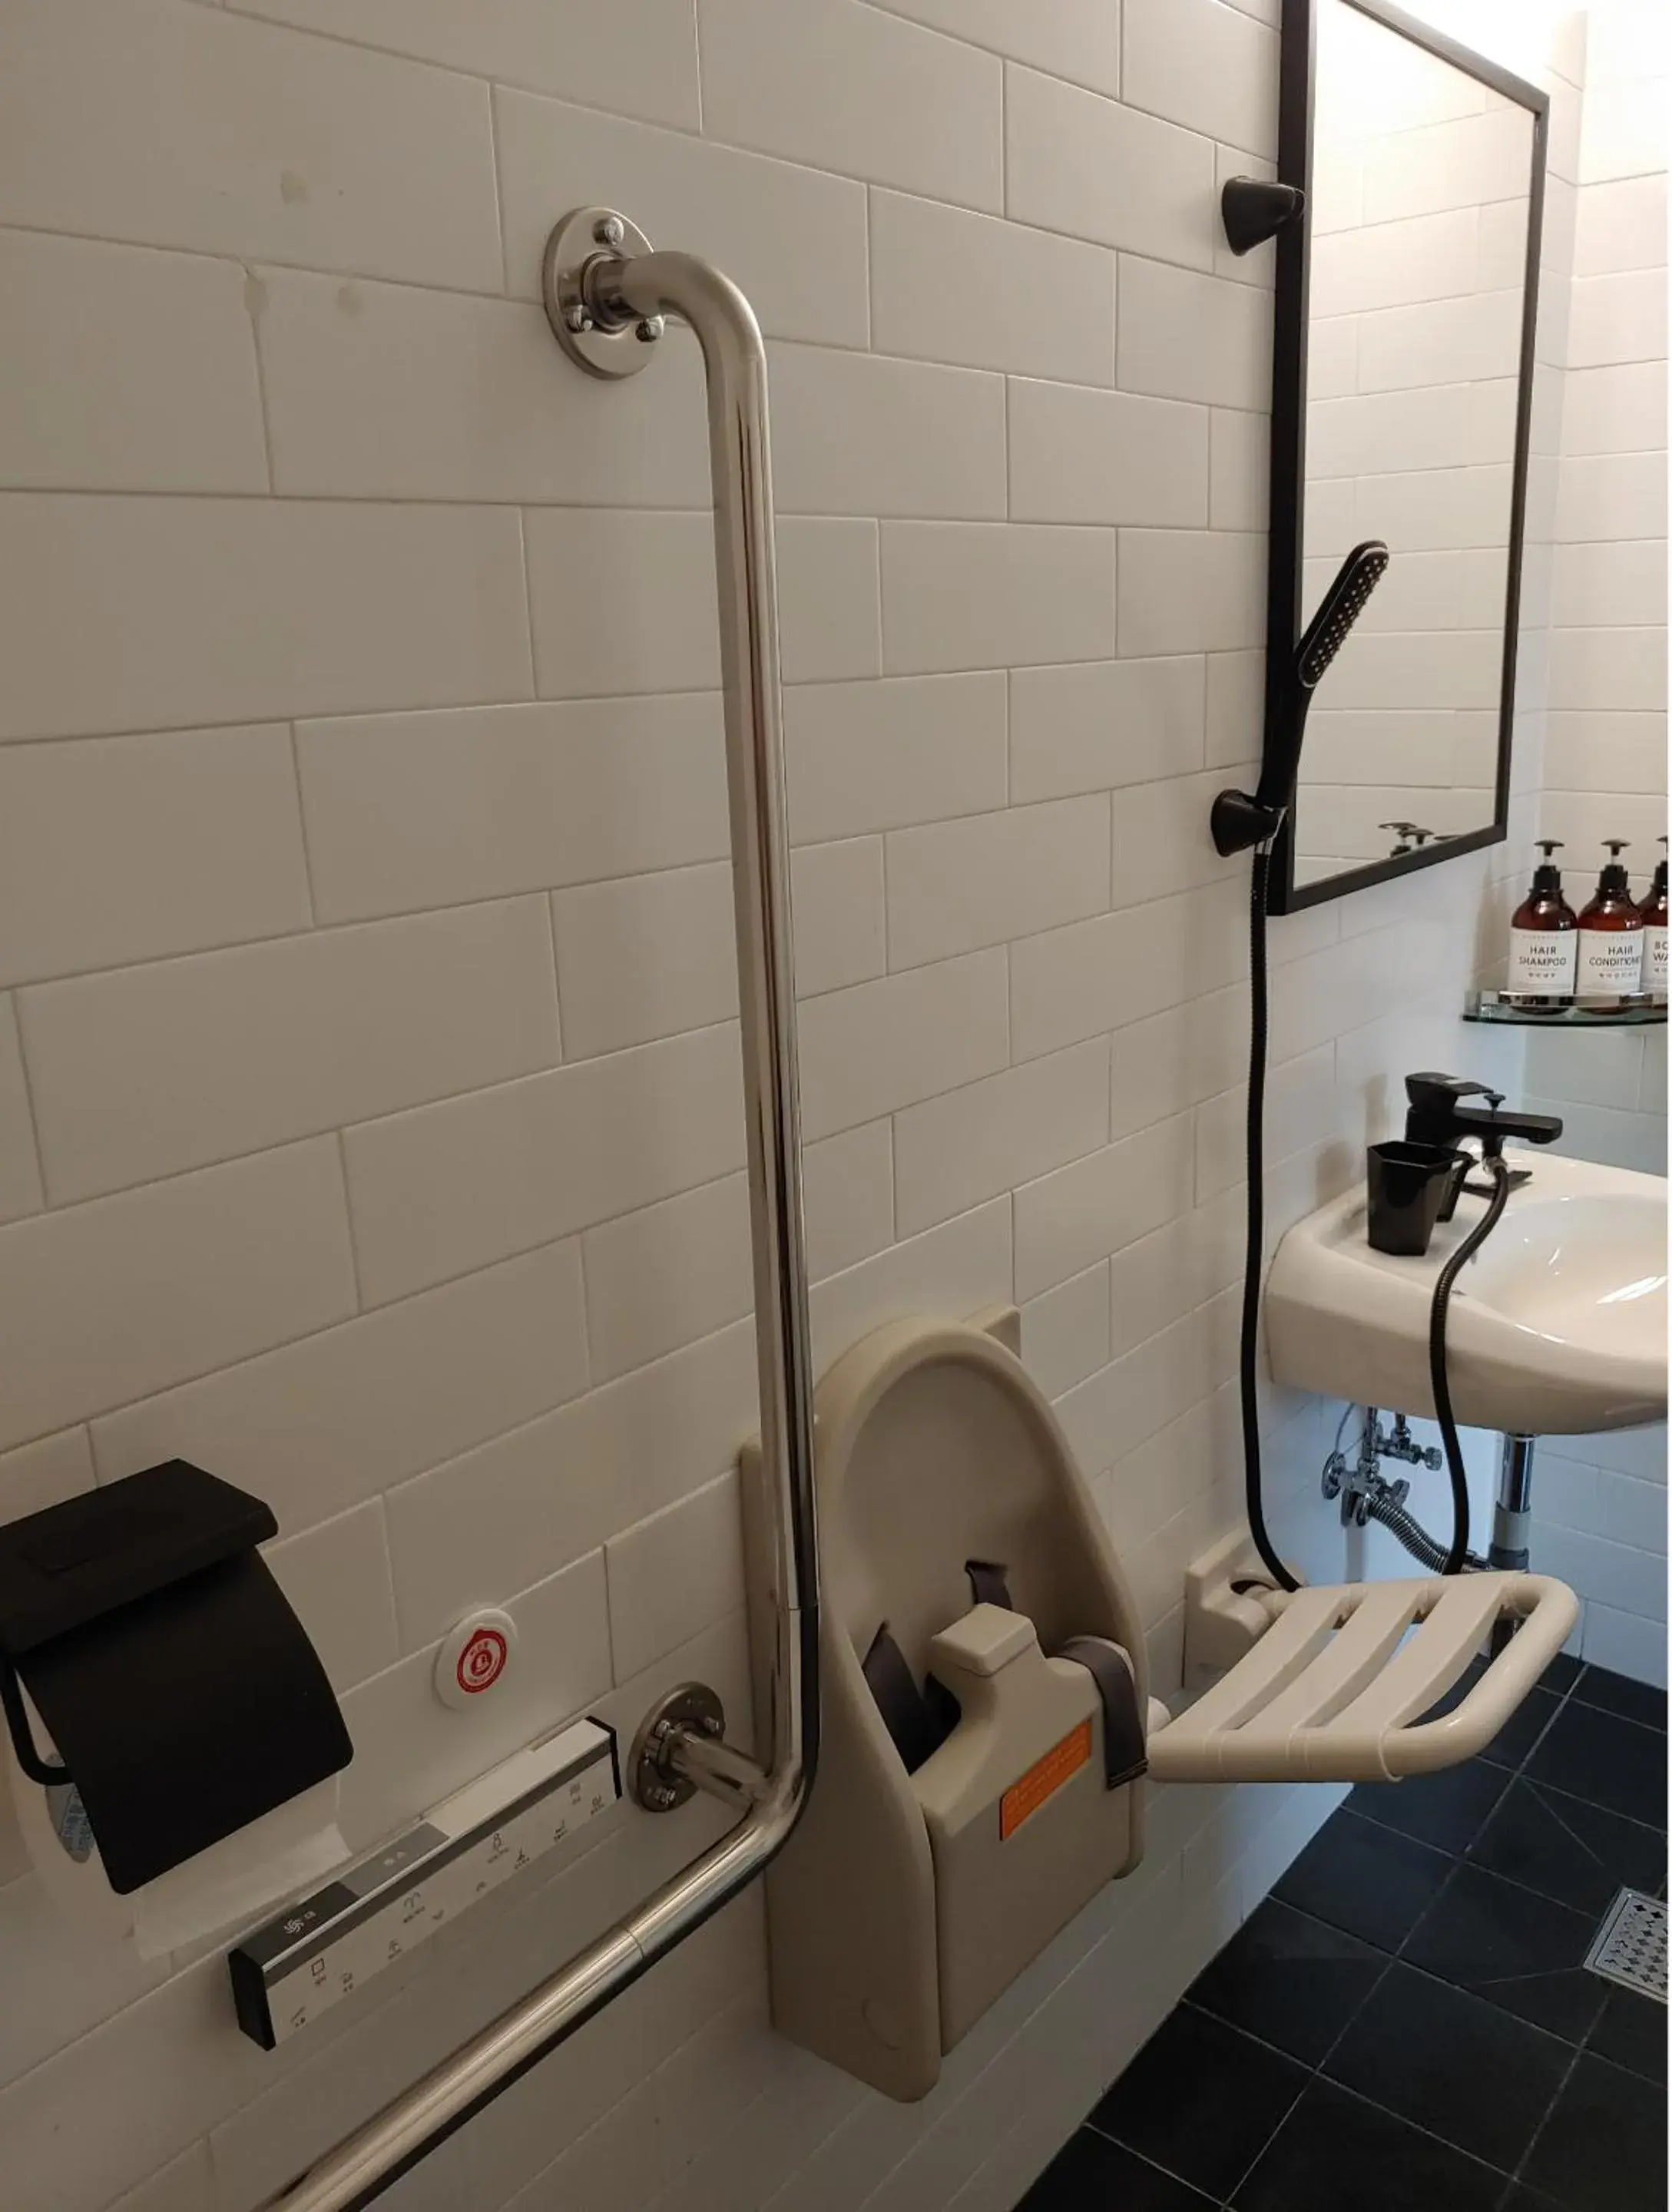 Facility for disabled guests, Bathroom in Wegoinn Hostel